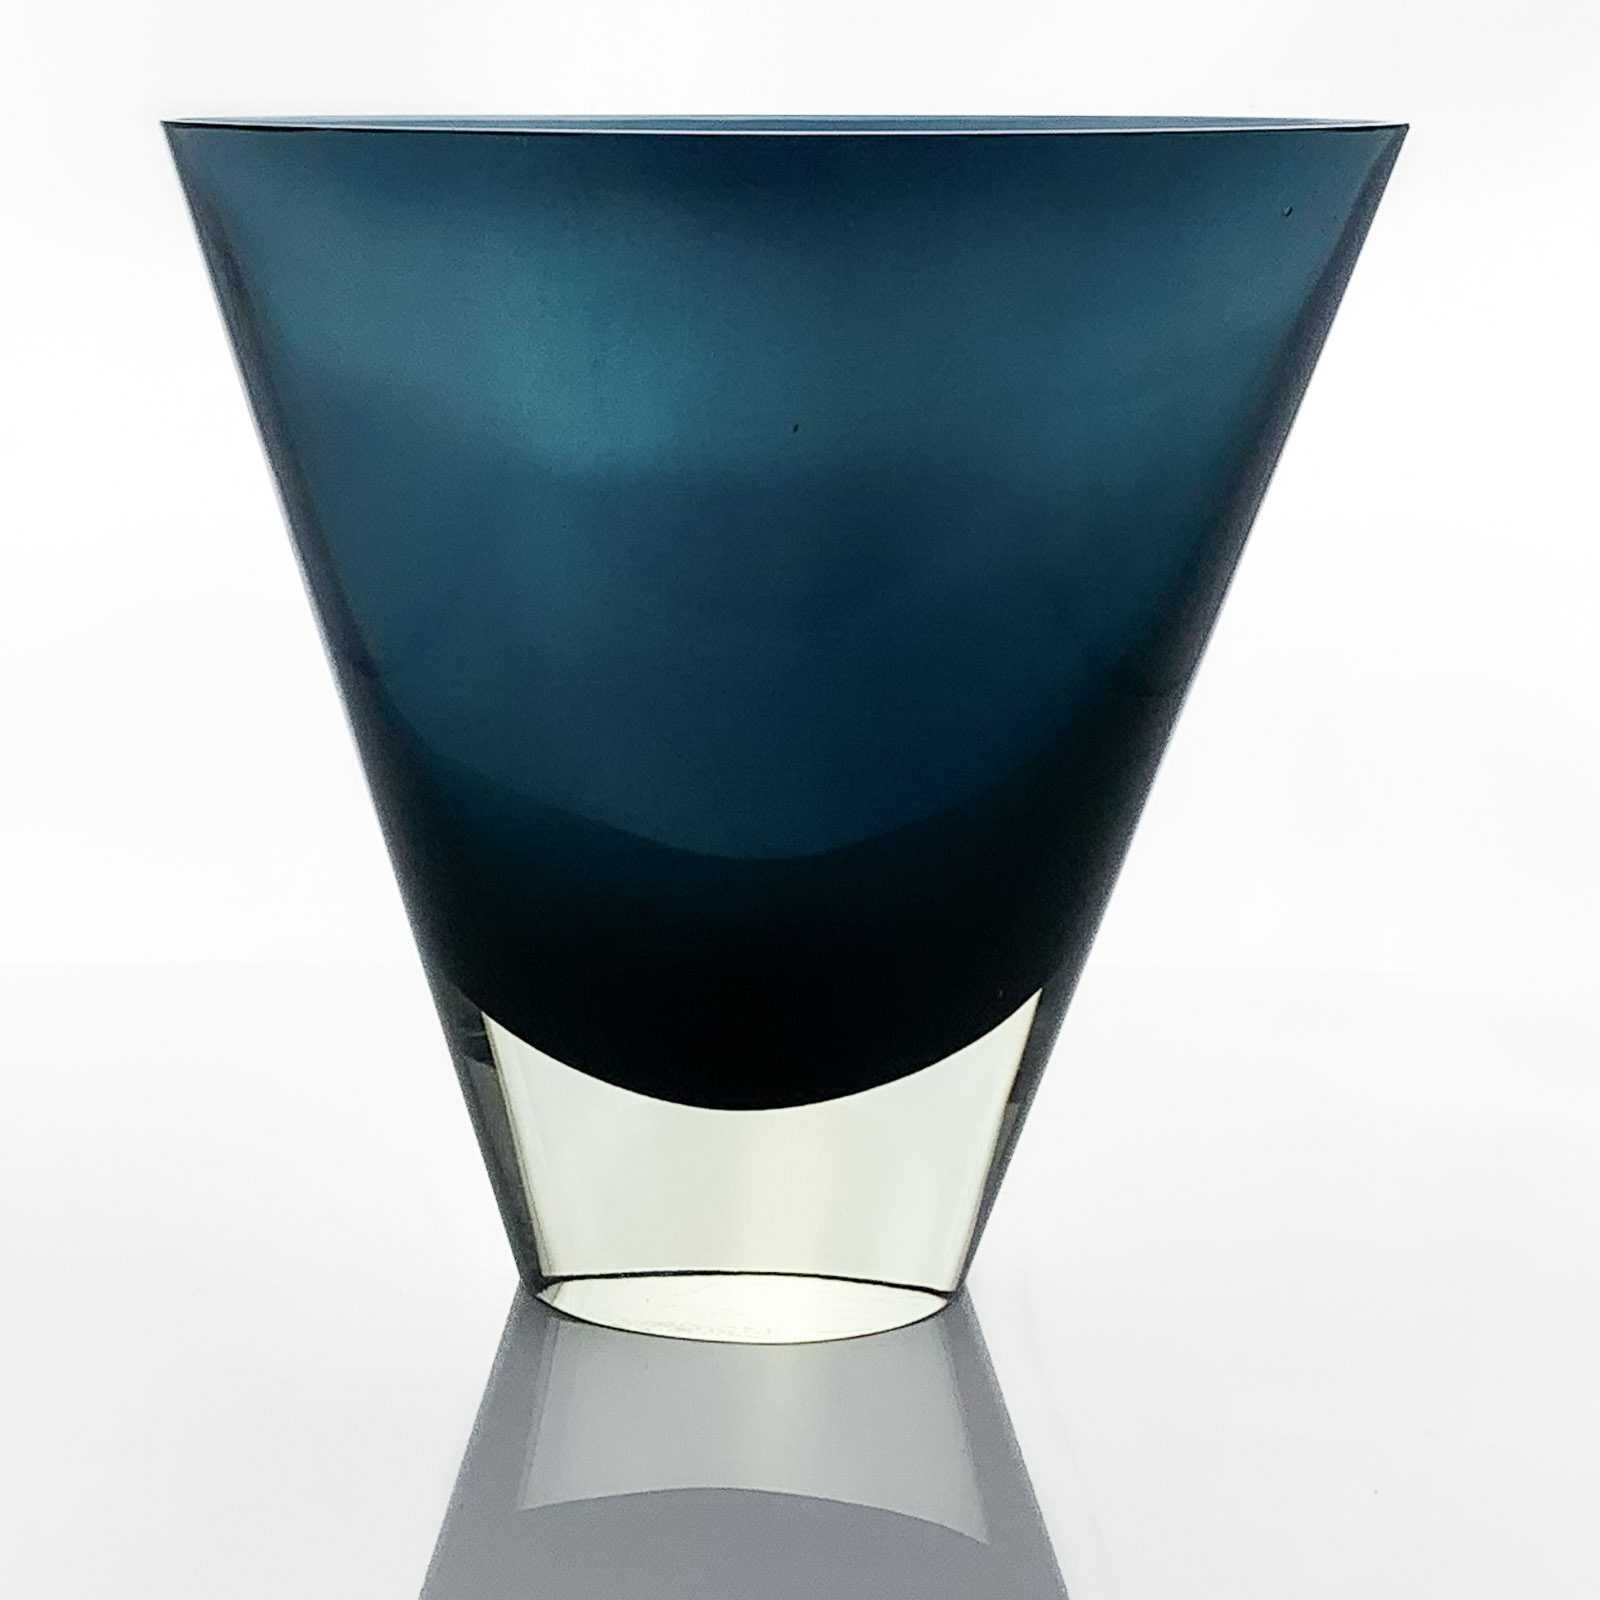 Kaj Franck - A glass art-object, model KF 234 - Nuutajärvi-Notsjö Finland, 1961